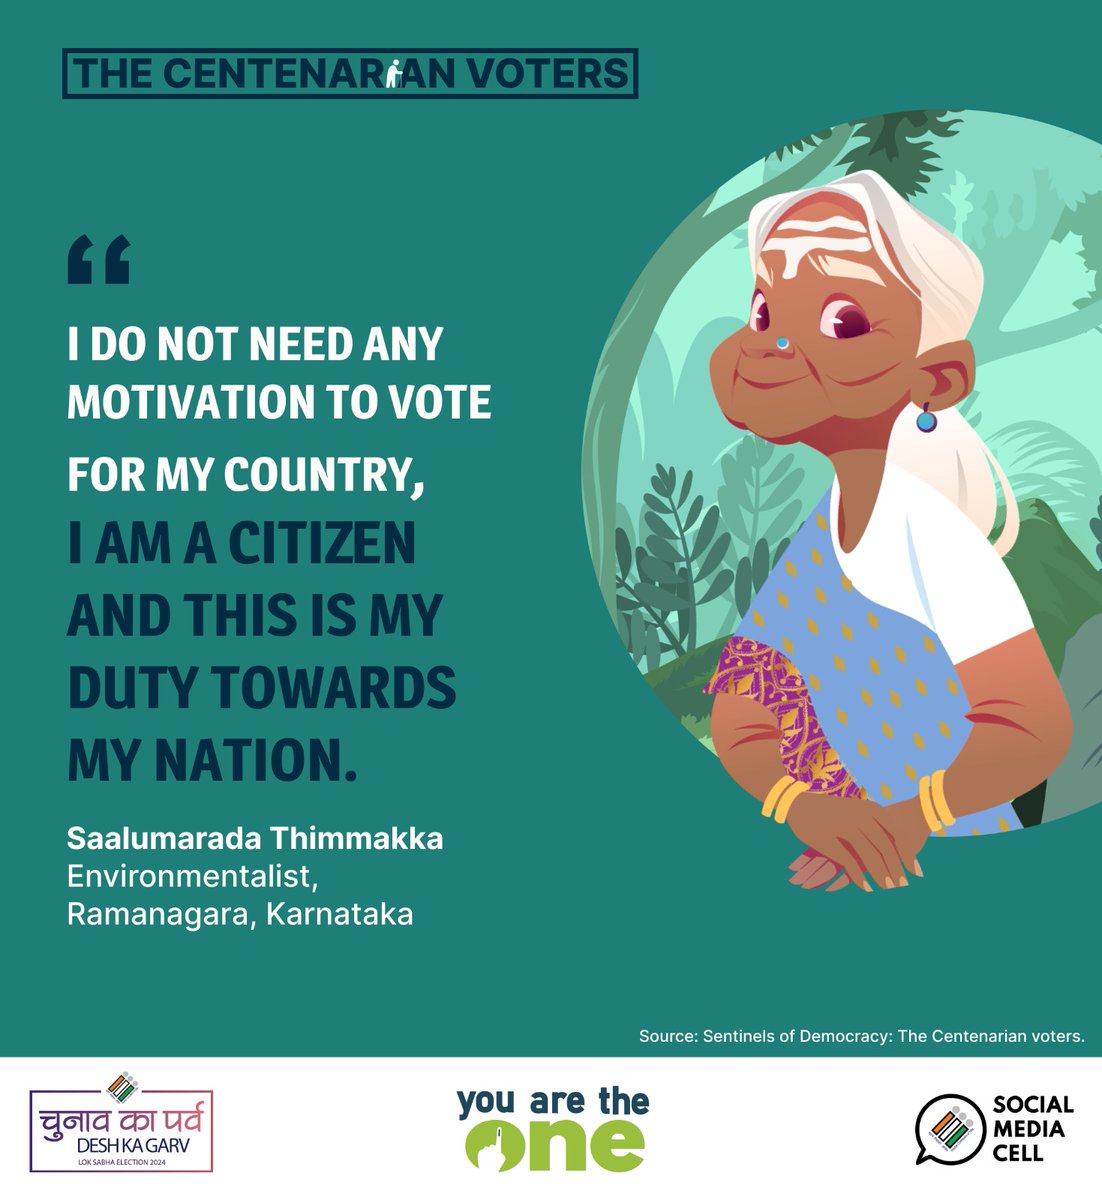 Evergreening democracy! Padma Shri Awardee, environmentalist and a centenarian voter, Saalumarada Thimmakka shared her message for voters. #YouAreTheOne #ChunavKaParv #DeshKaGarv #Elections2024